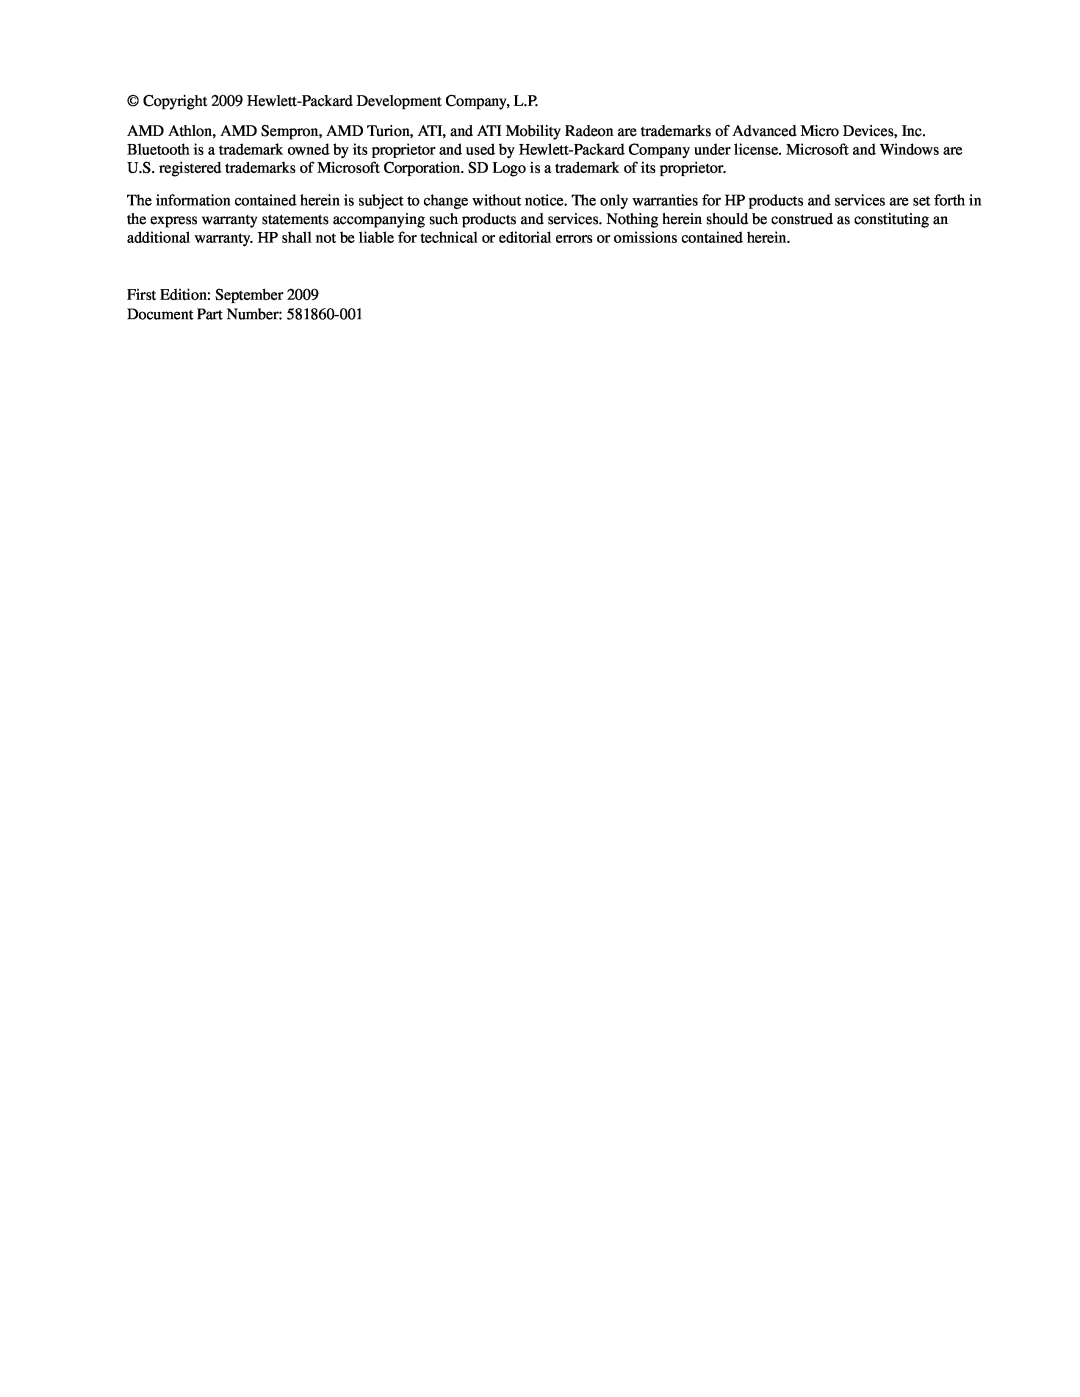 HP CQ41-204AU manual Copyright 2009 Hewlett-Packard Development Company, L.P, First Edition September Document Part Number 